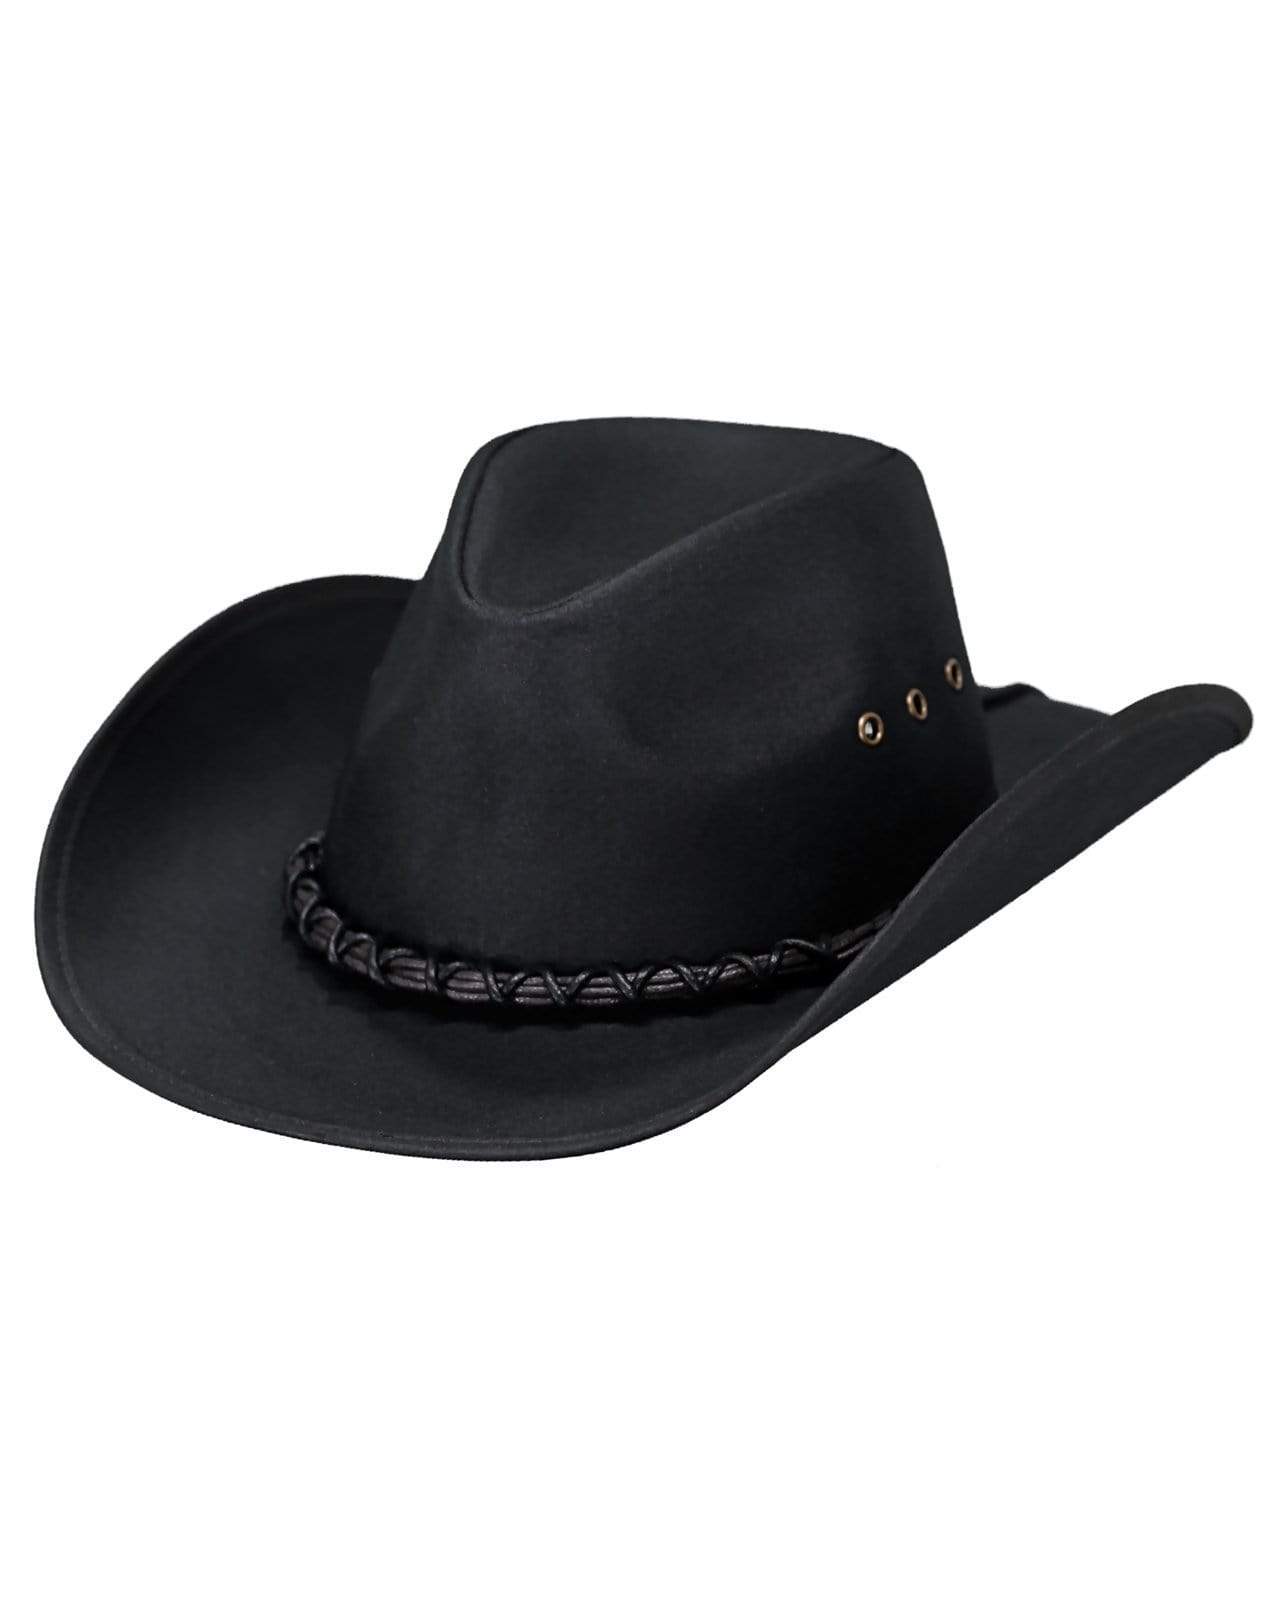 Outback Trading Company Bootlegger Black / S 1484-BLK-SM 089043239455 Hats